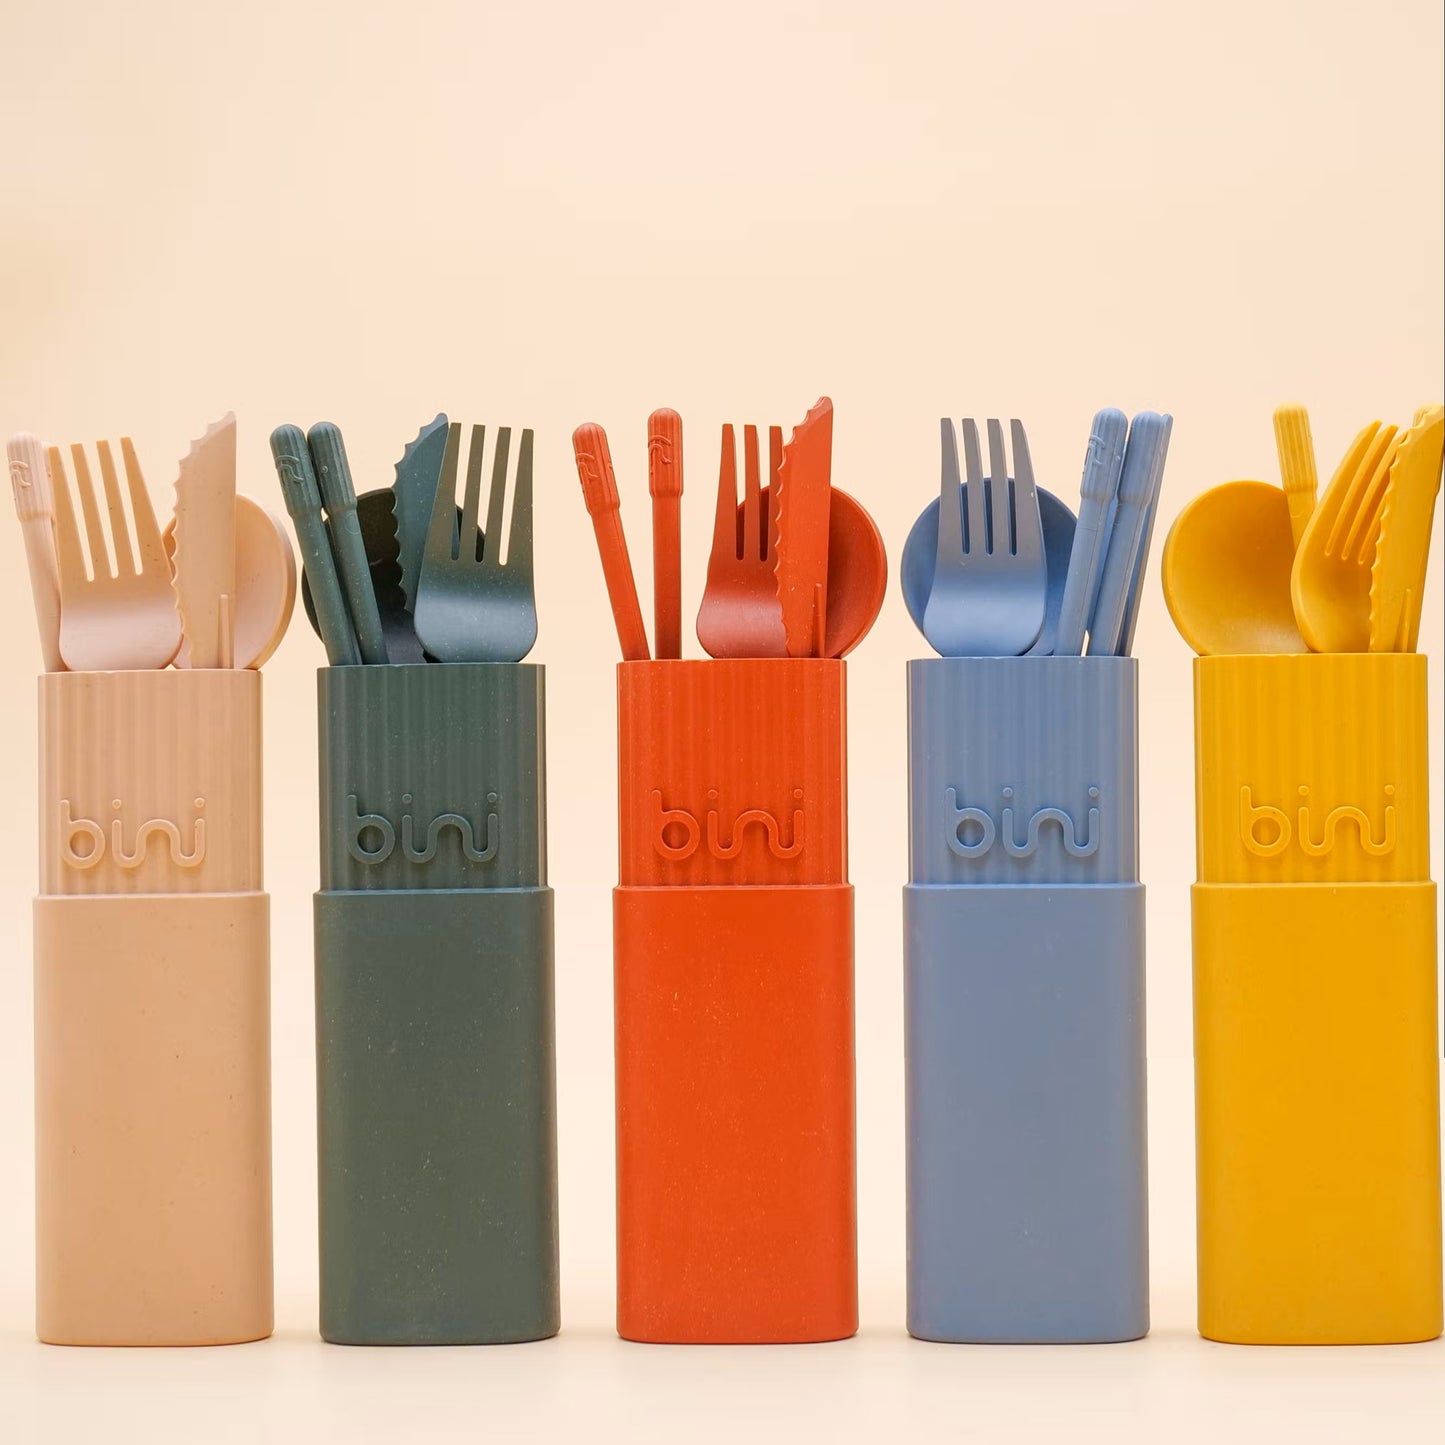 Reusable cutlery kit | YELLOW